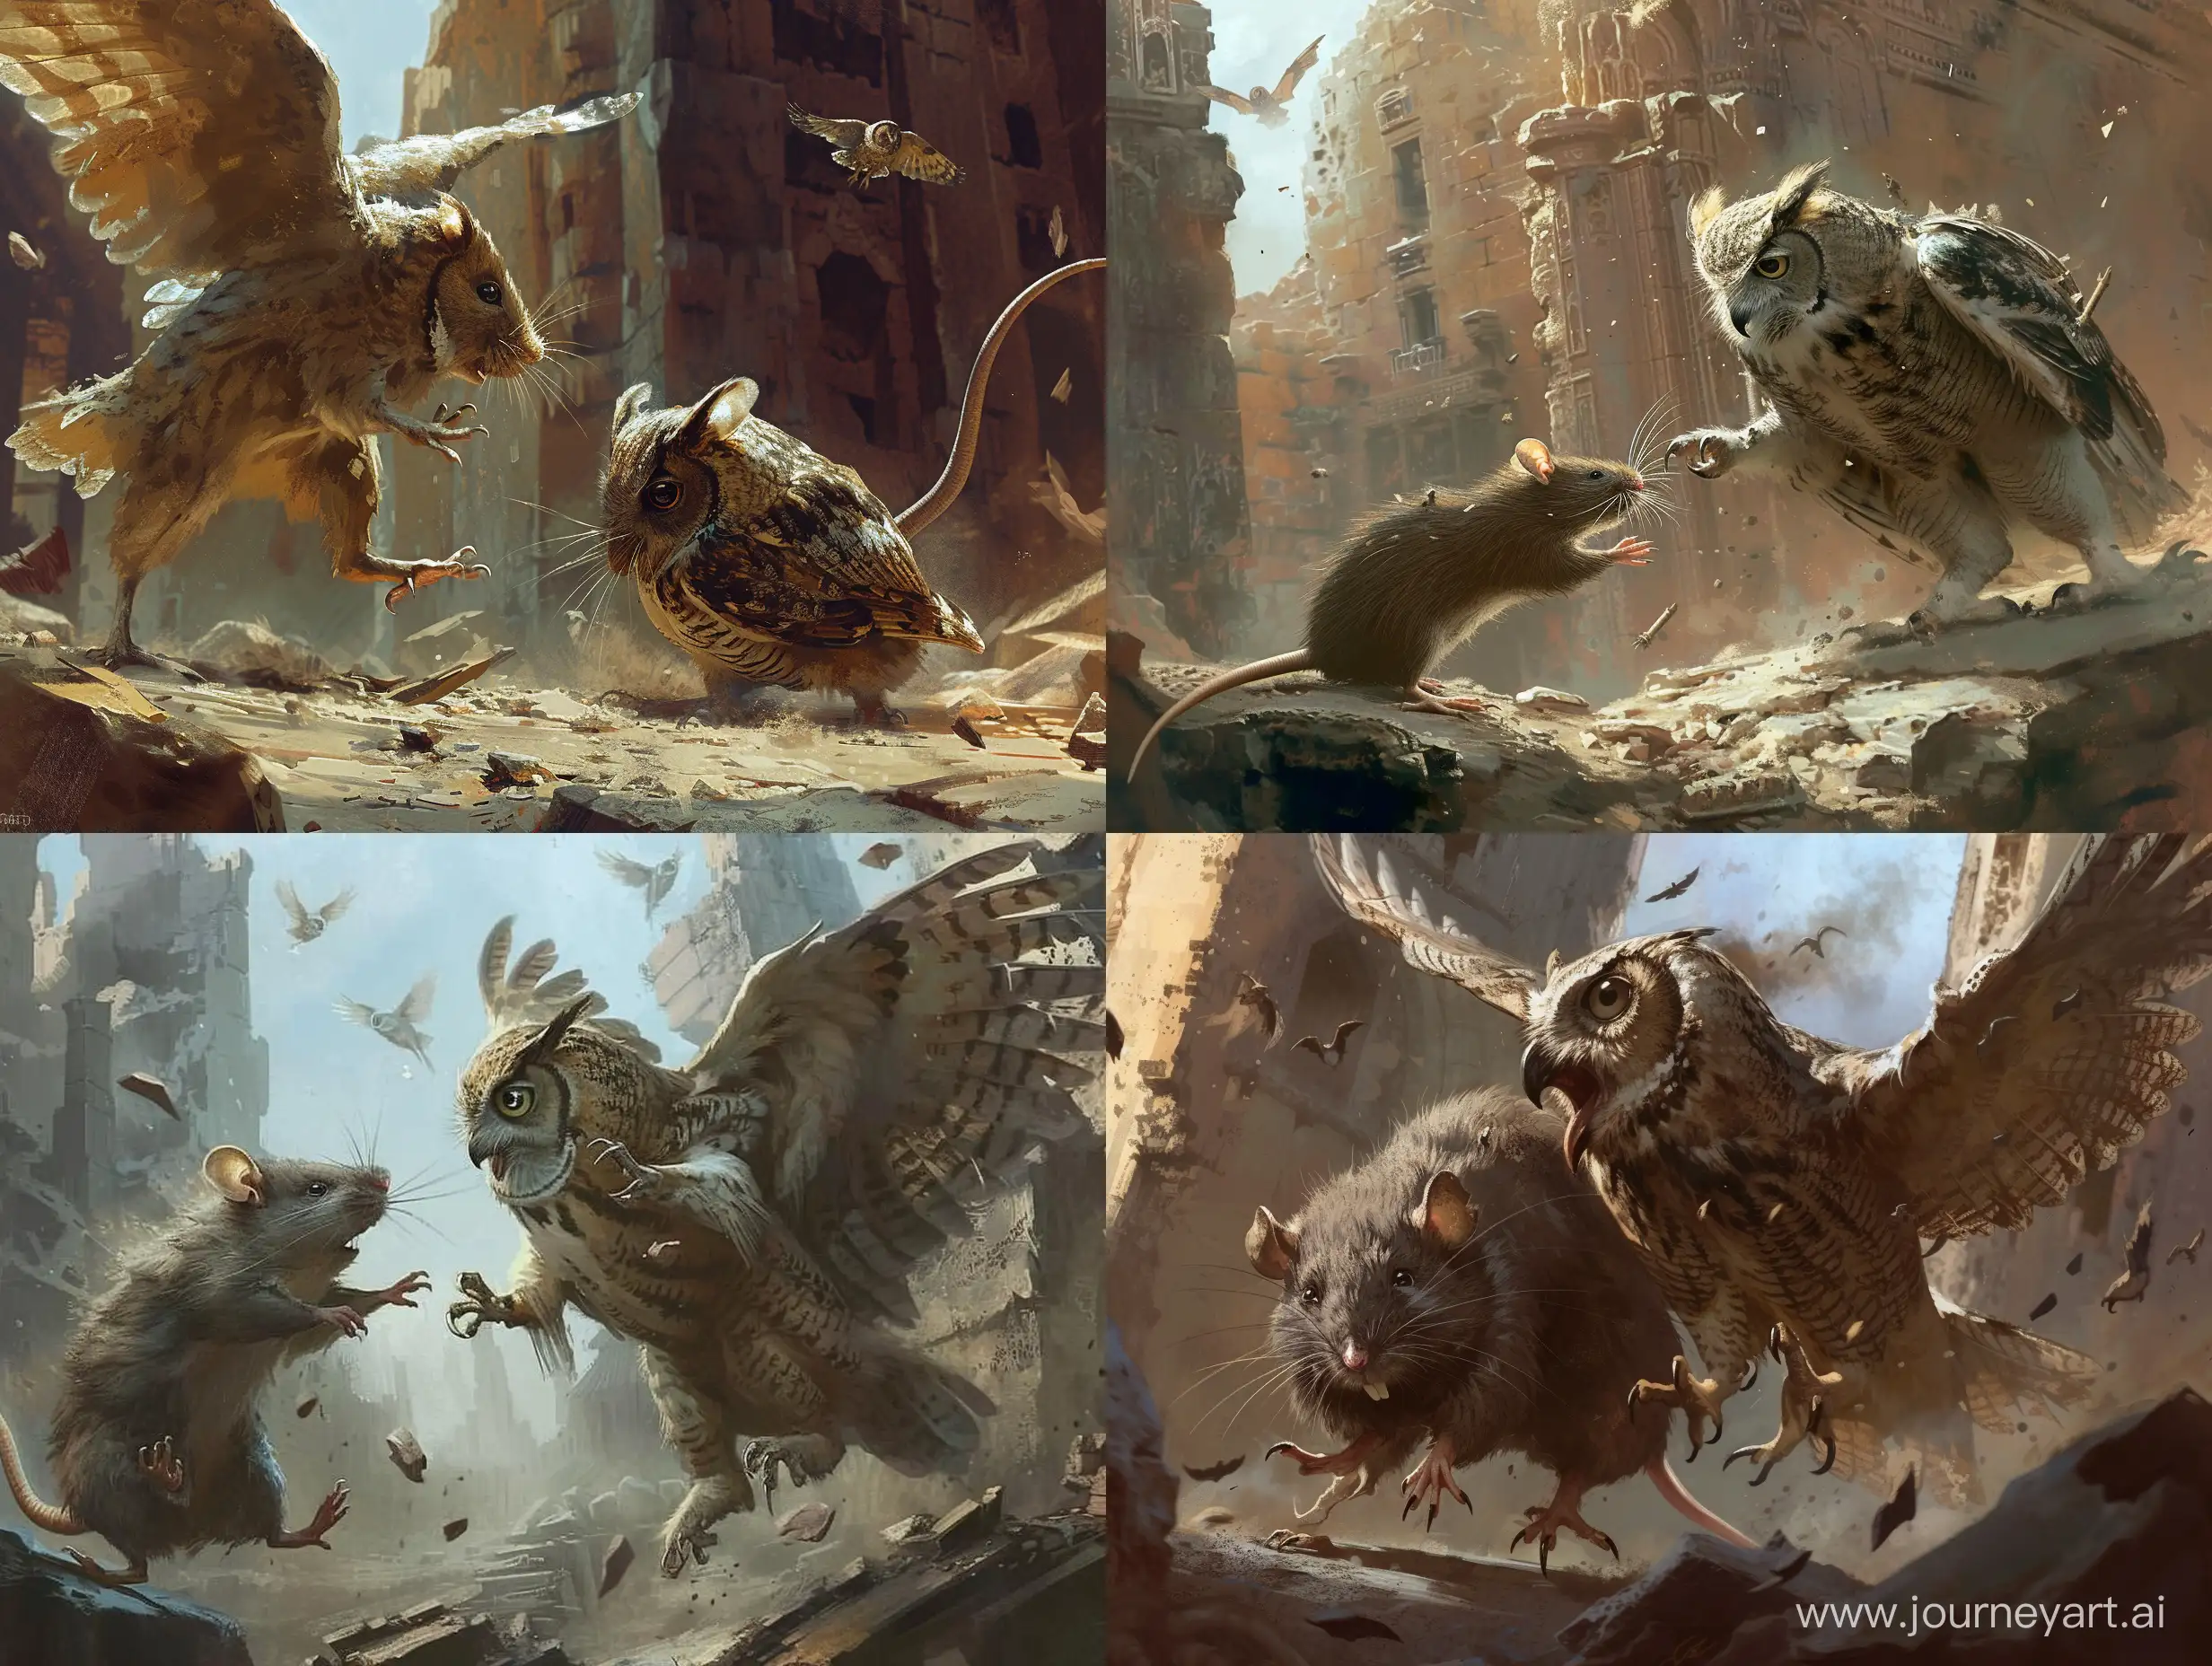 Epic-Dark-Fantasy-Battle-BattleWorn-Rat-and-Owl-Amidst-Ancient-City-Ruins